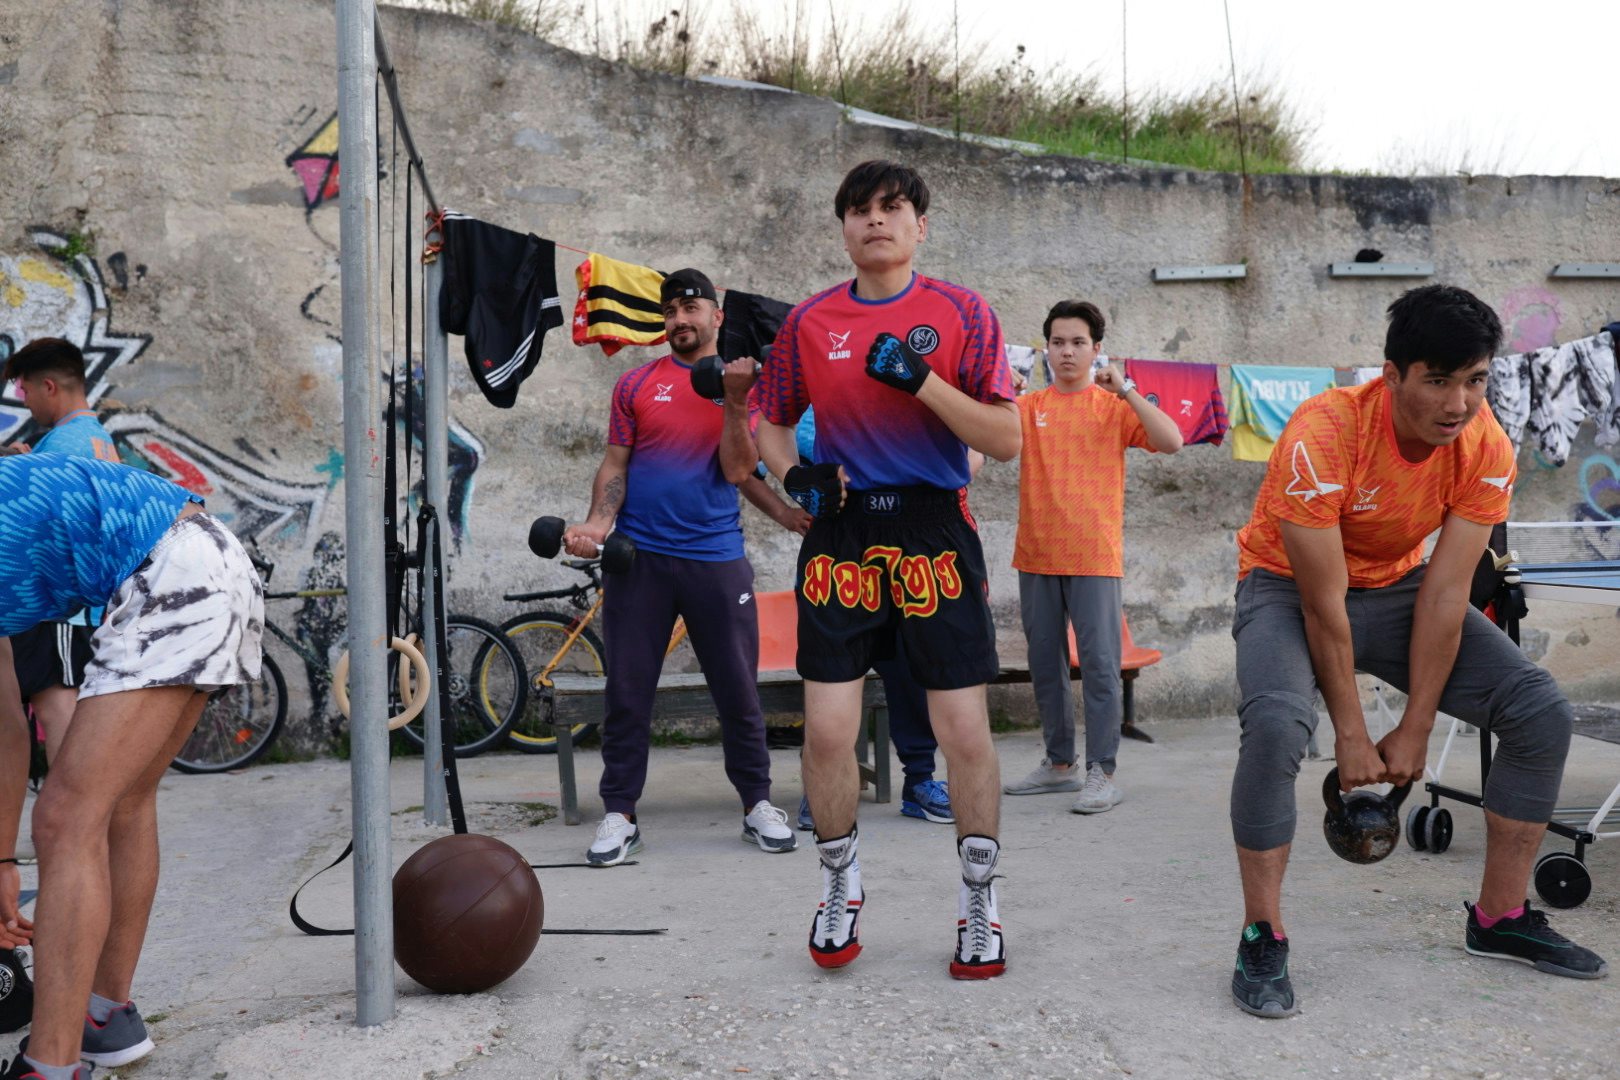 Klabu Clubhouse in Lesvos Greece with Refugees wearing el Seed and Klabu Teamwear